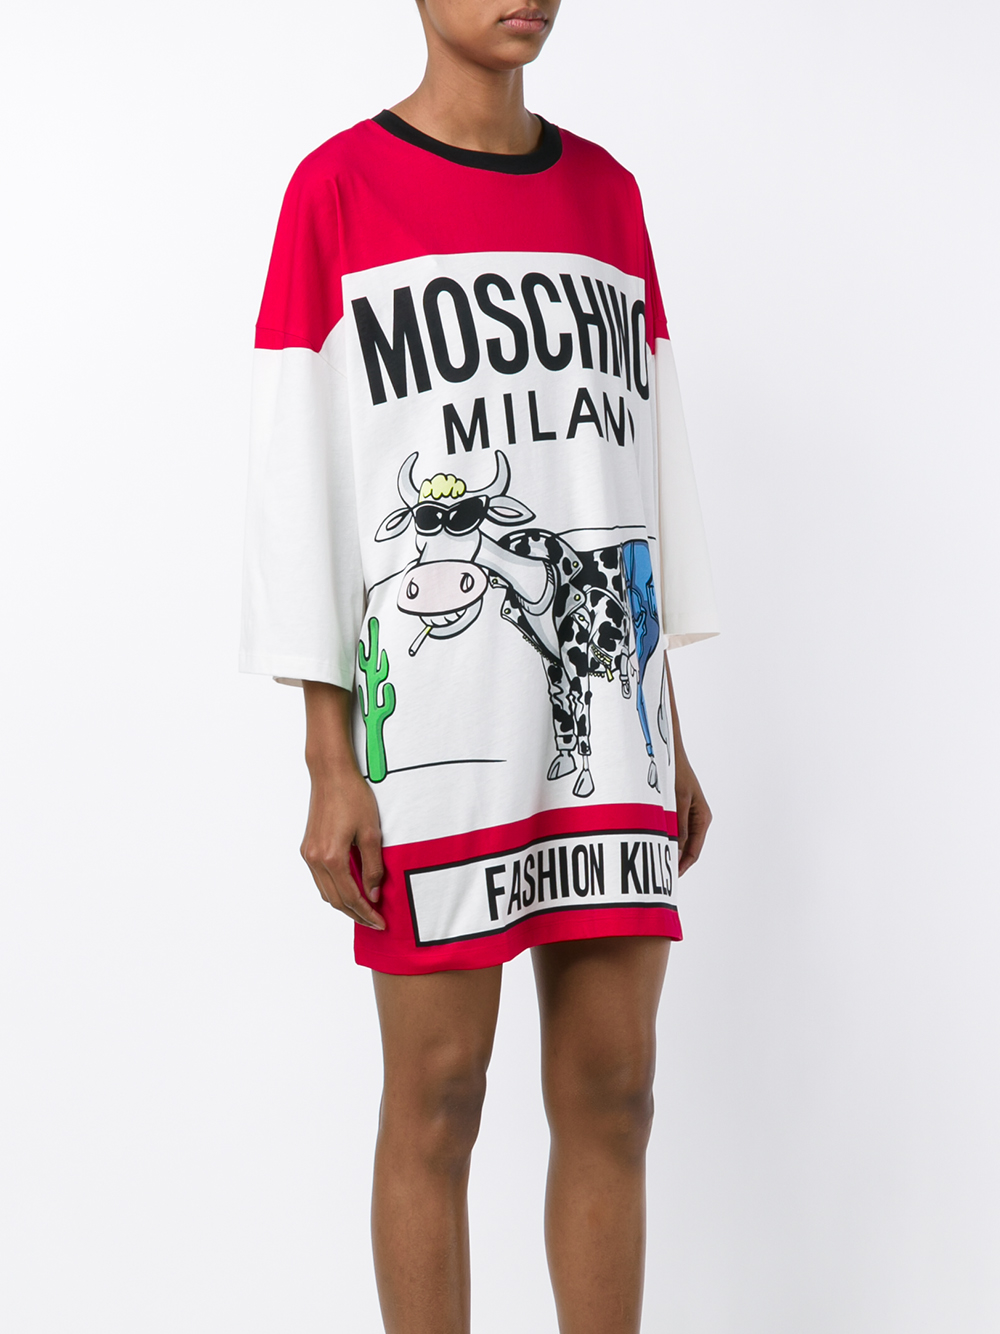 Lyst Moschino Fashion  Kills T  shirt  Dress  in Red